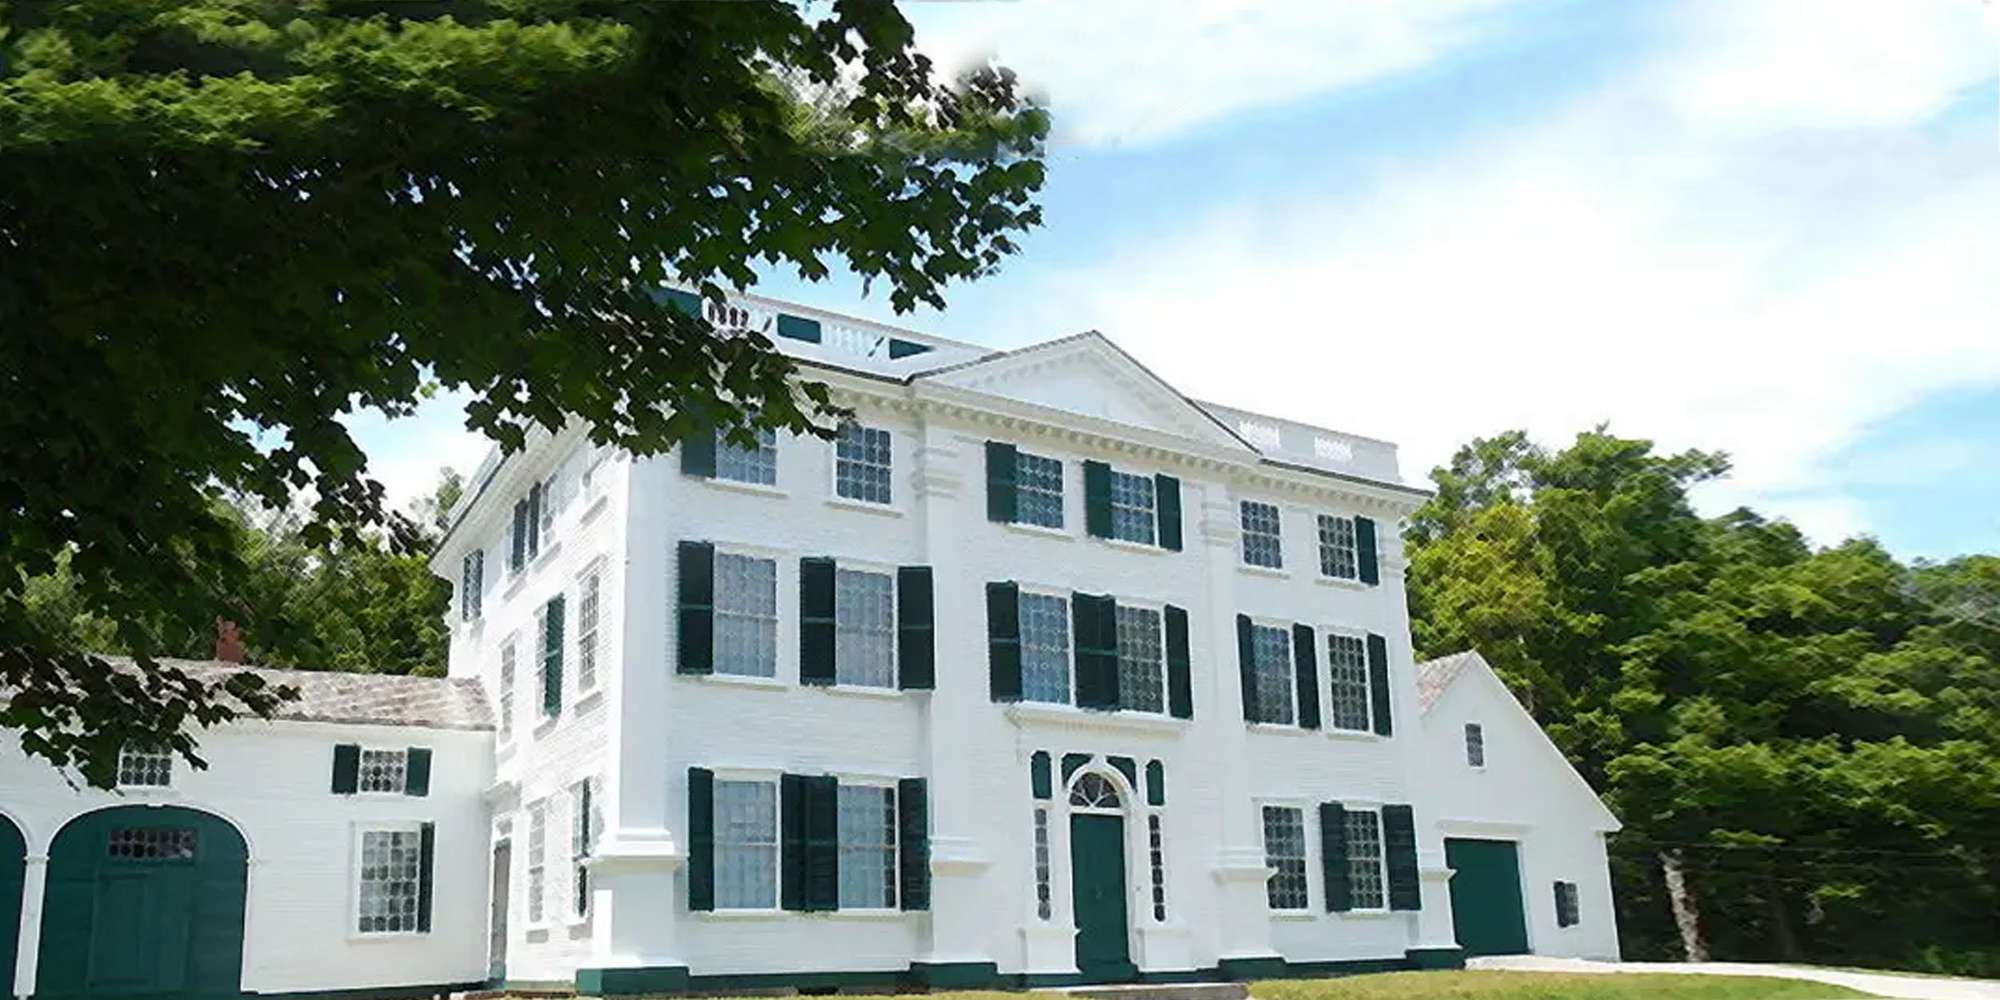 Photo of Barrett House in New Ipswich, New Hampshire